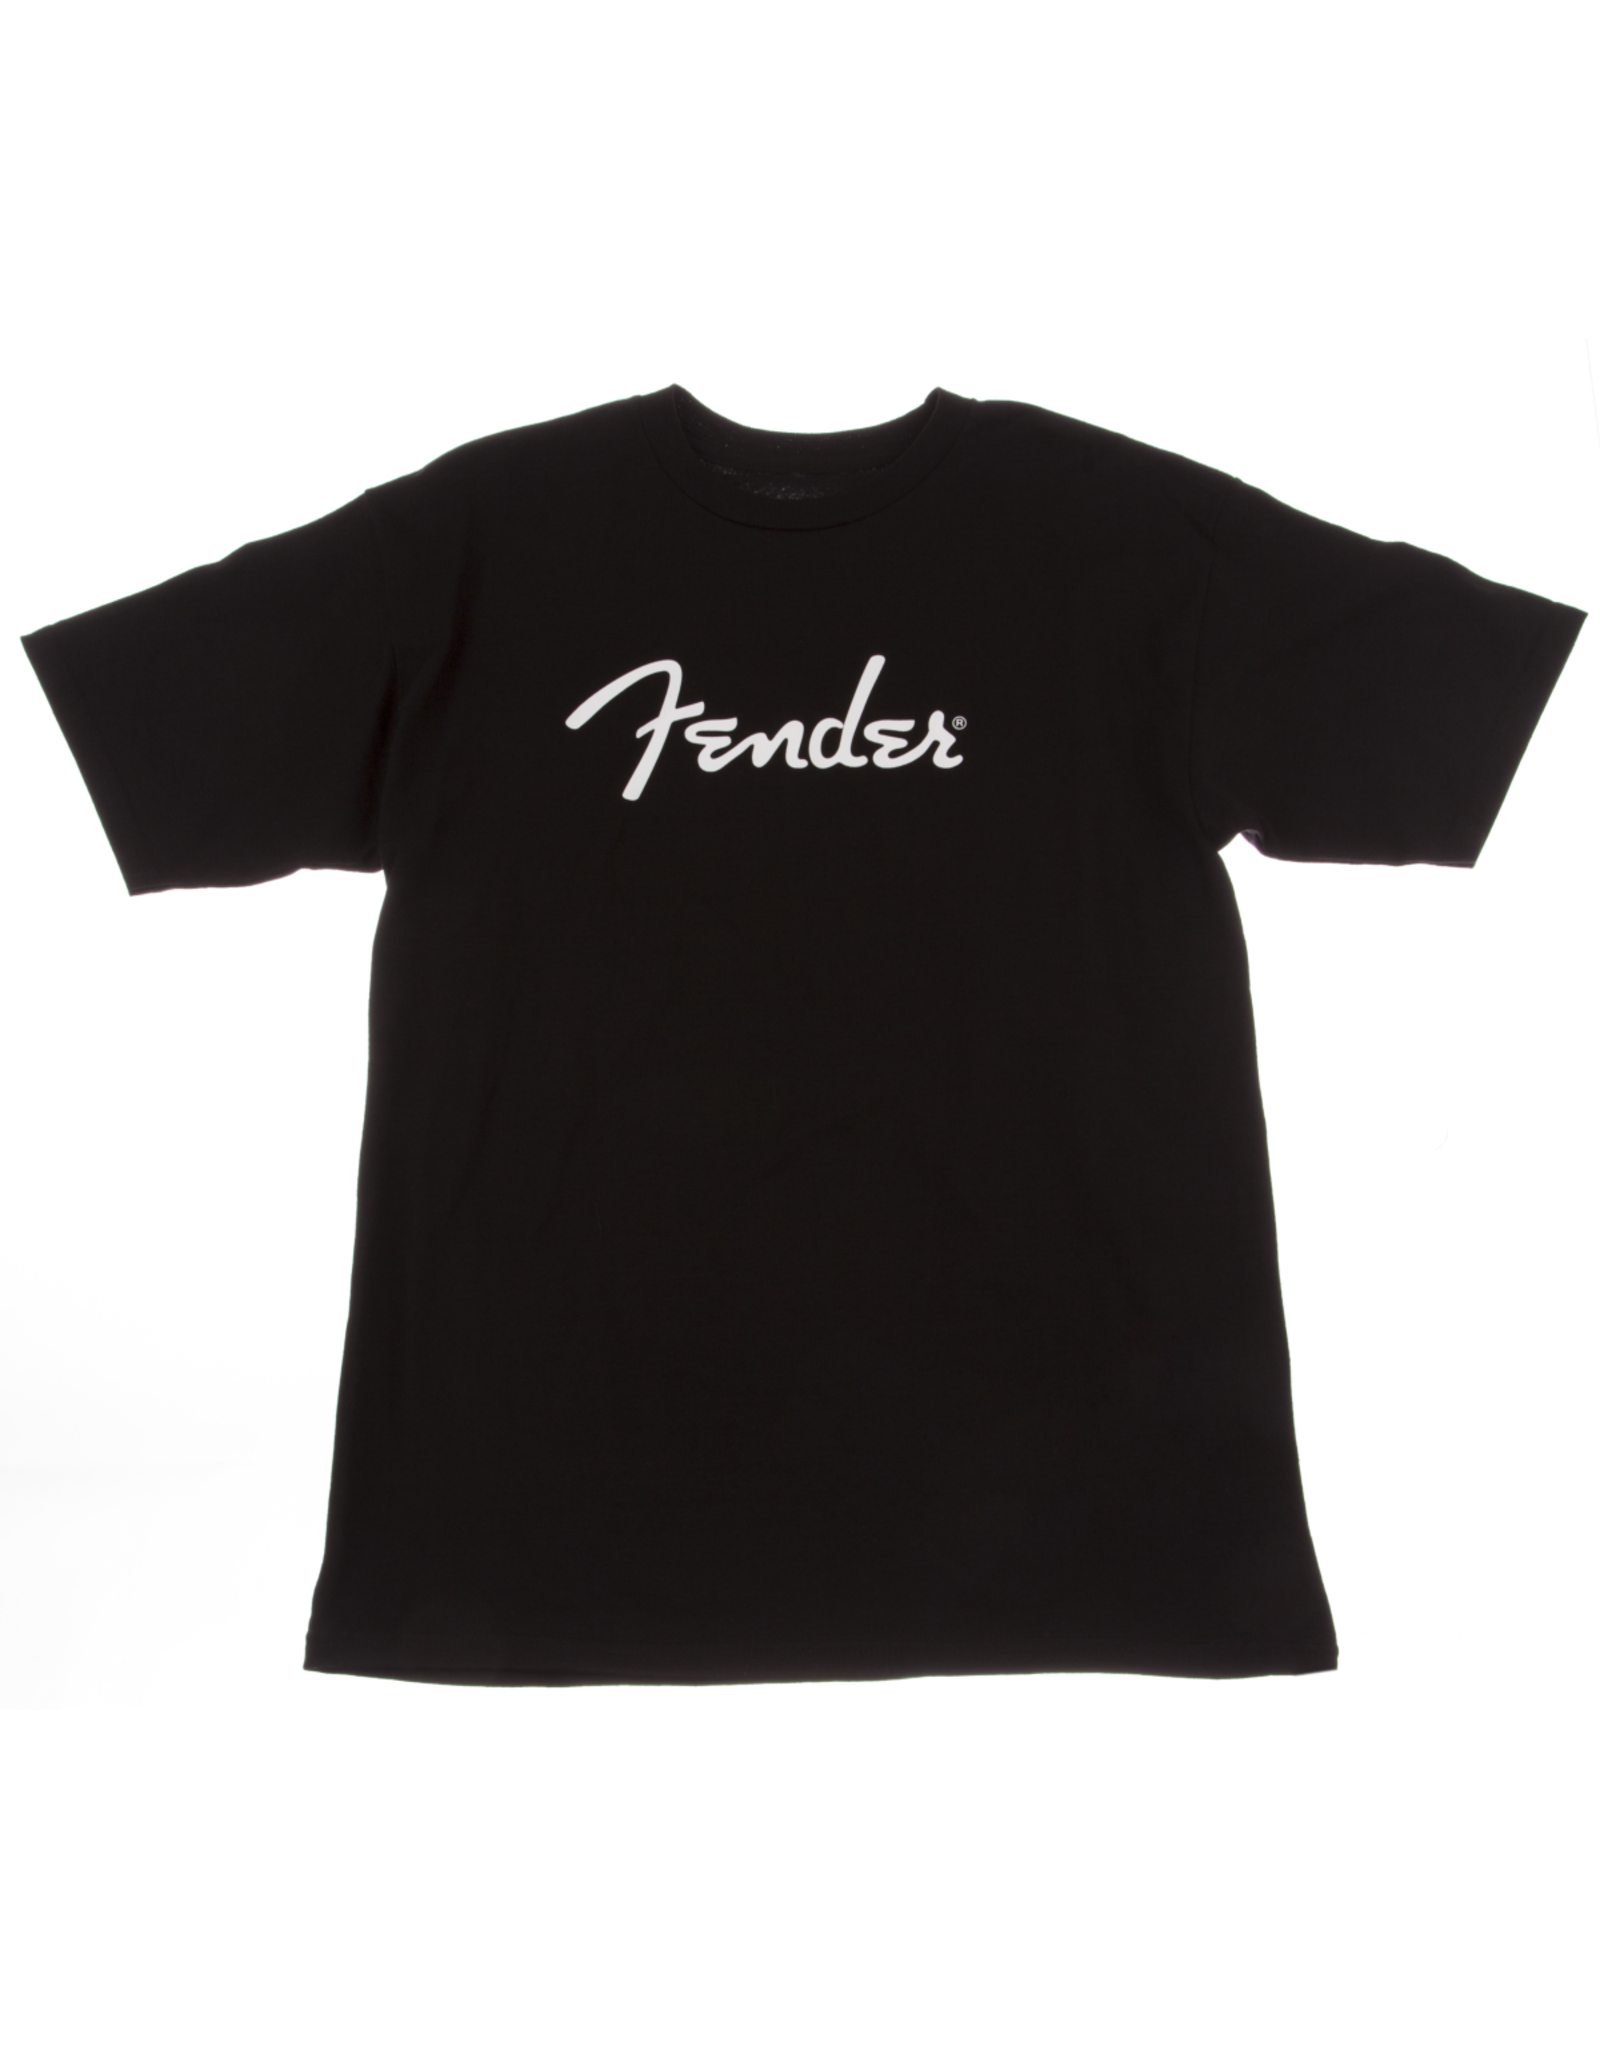 Fender Fender Spaghetti Logo T-Shirt, Black, L